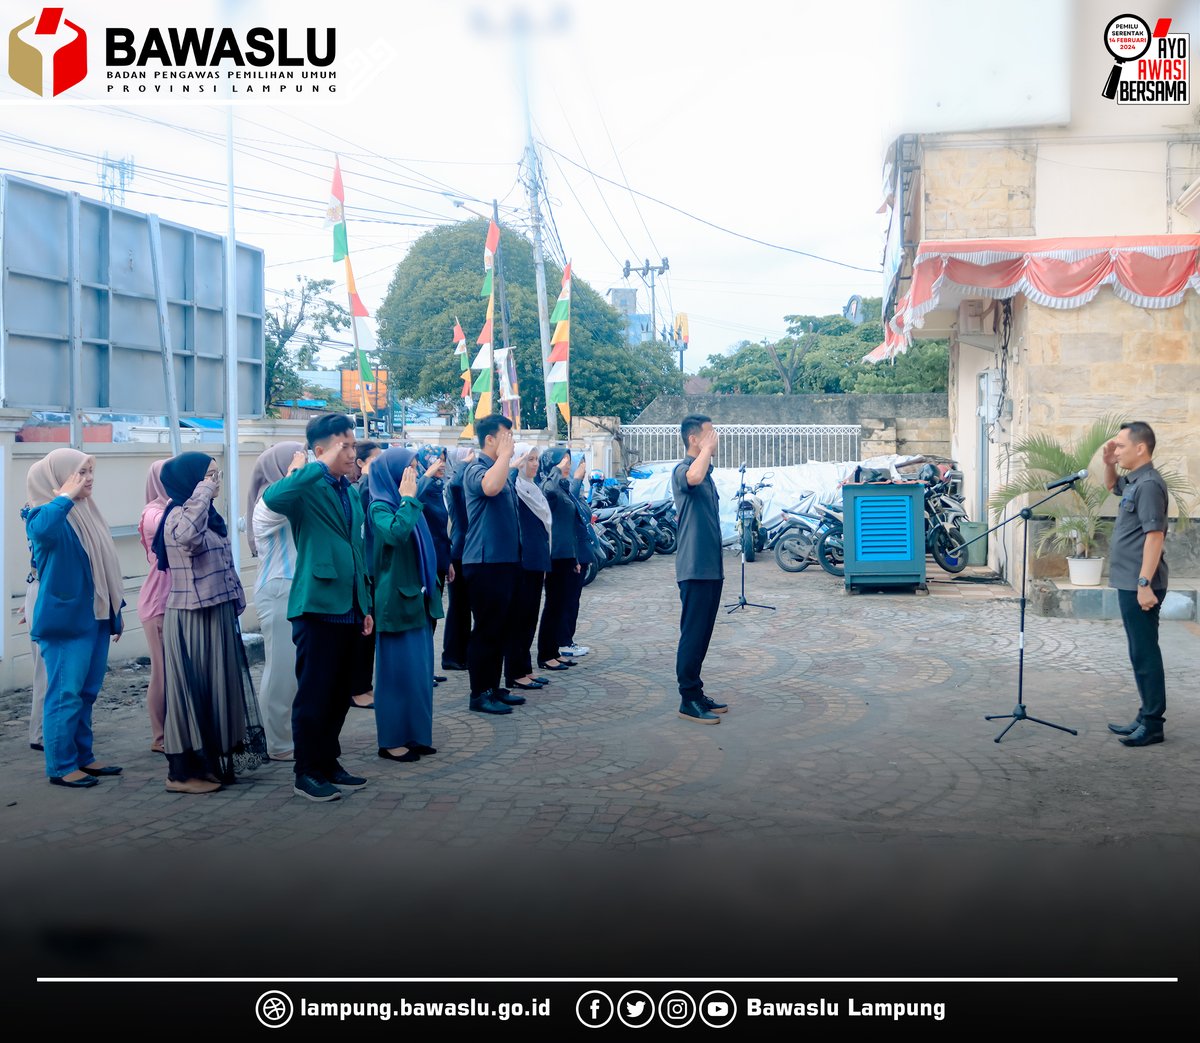 Sekretariat Bawaslu Lampung melaksanakan rutinitas apel senin pagi di halaman Kantor Bawaslu Lampung, Senin (03/07)

Selengkapnya : lampung.bawaslu.go.id/apel-senin-pag…

#AyoAwasiBersama
#KawalHakPilih
#PemiluSerentak2024
#BawasluBerkolaborasi
#BawasluRI
#BawasluLampung
#CegahAwasiTindak